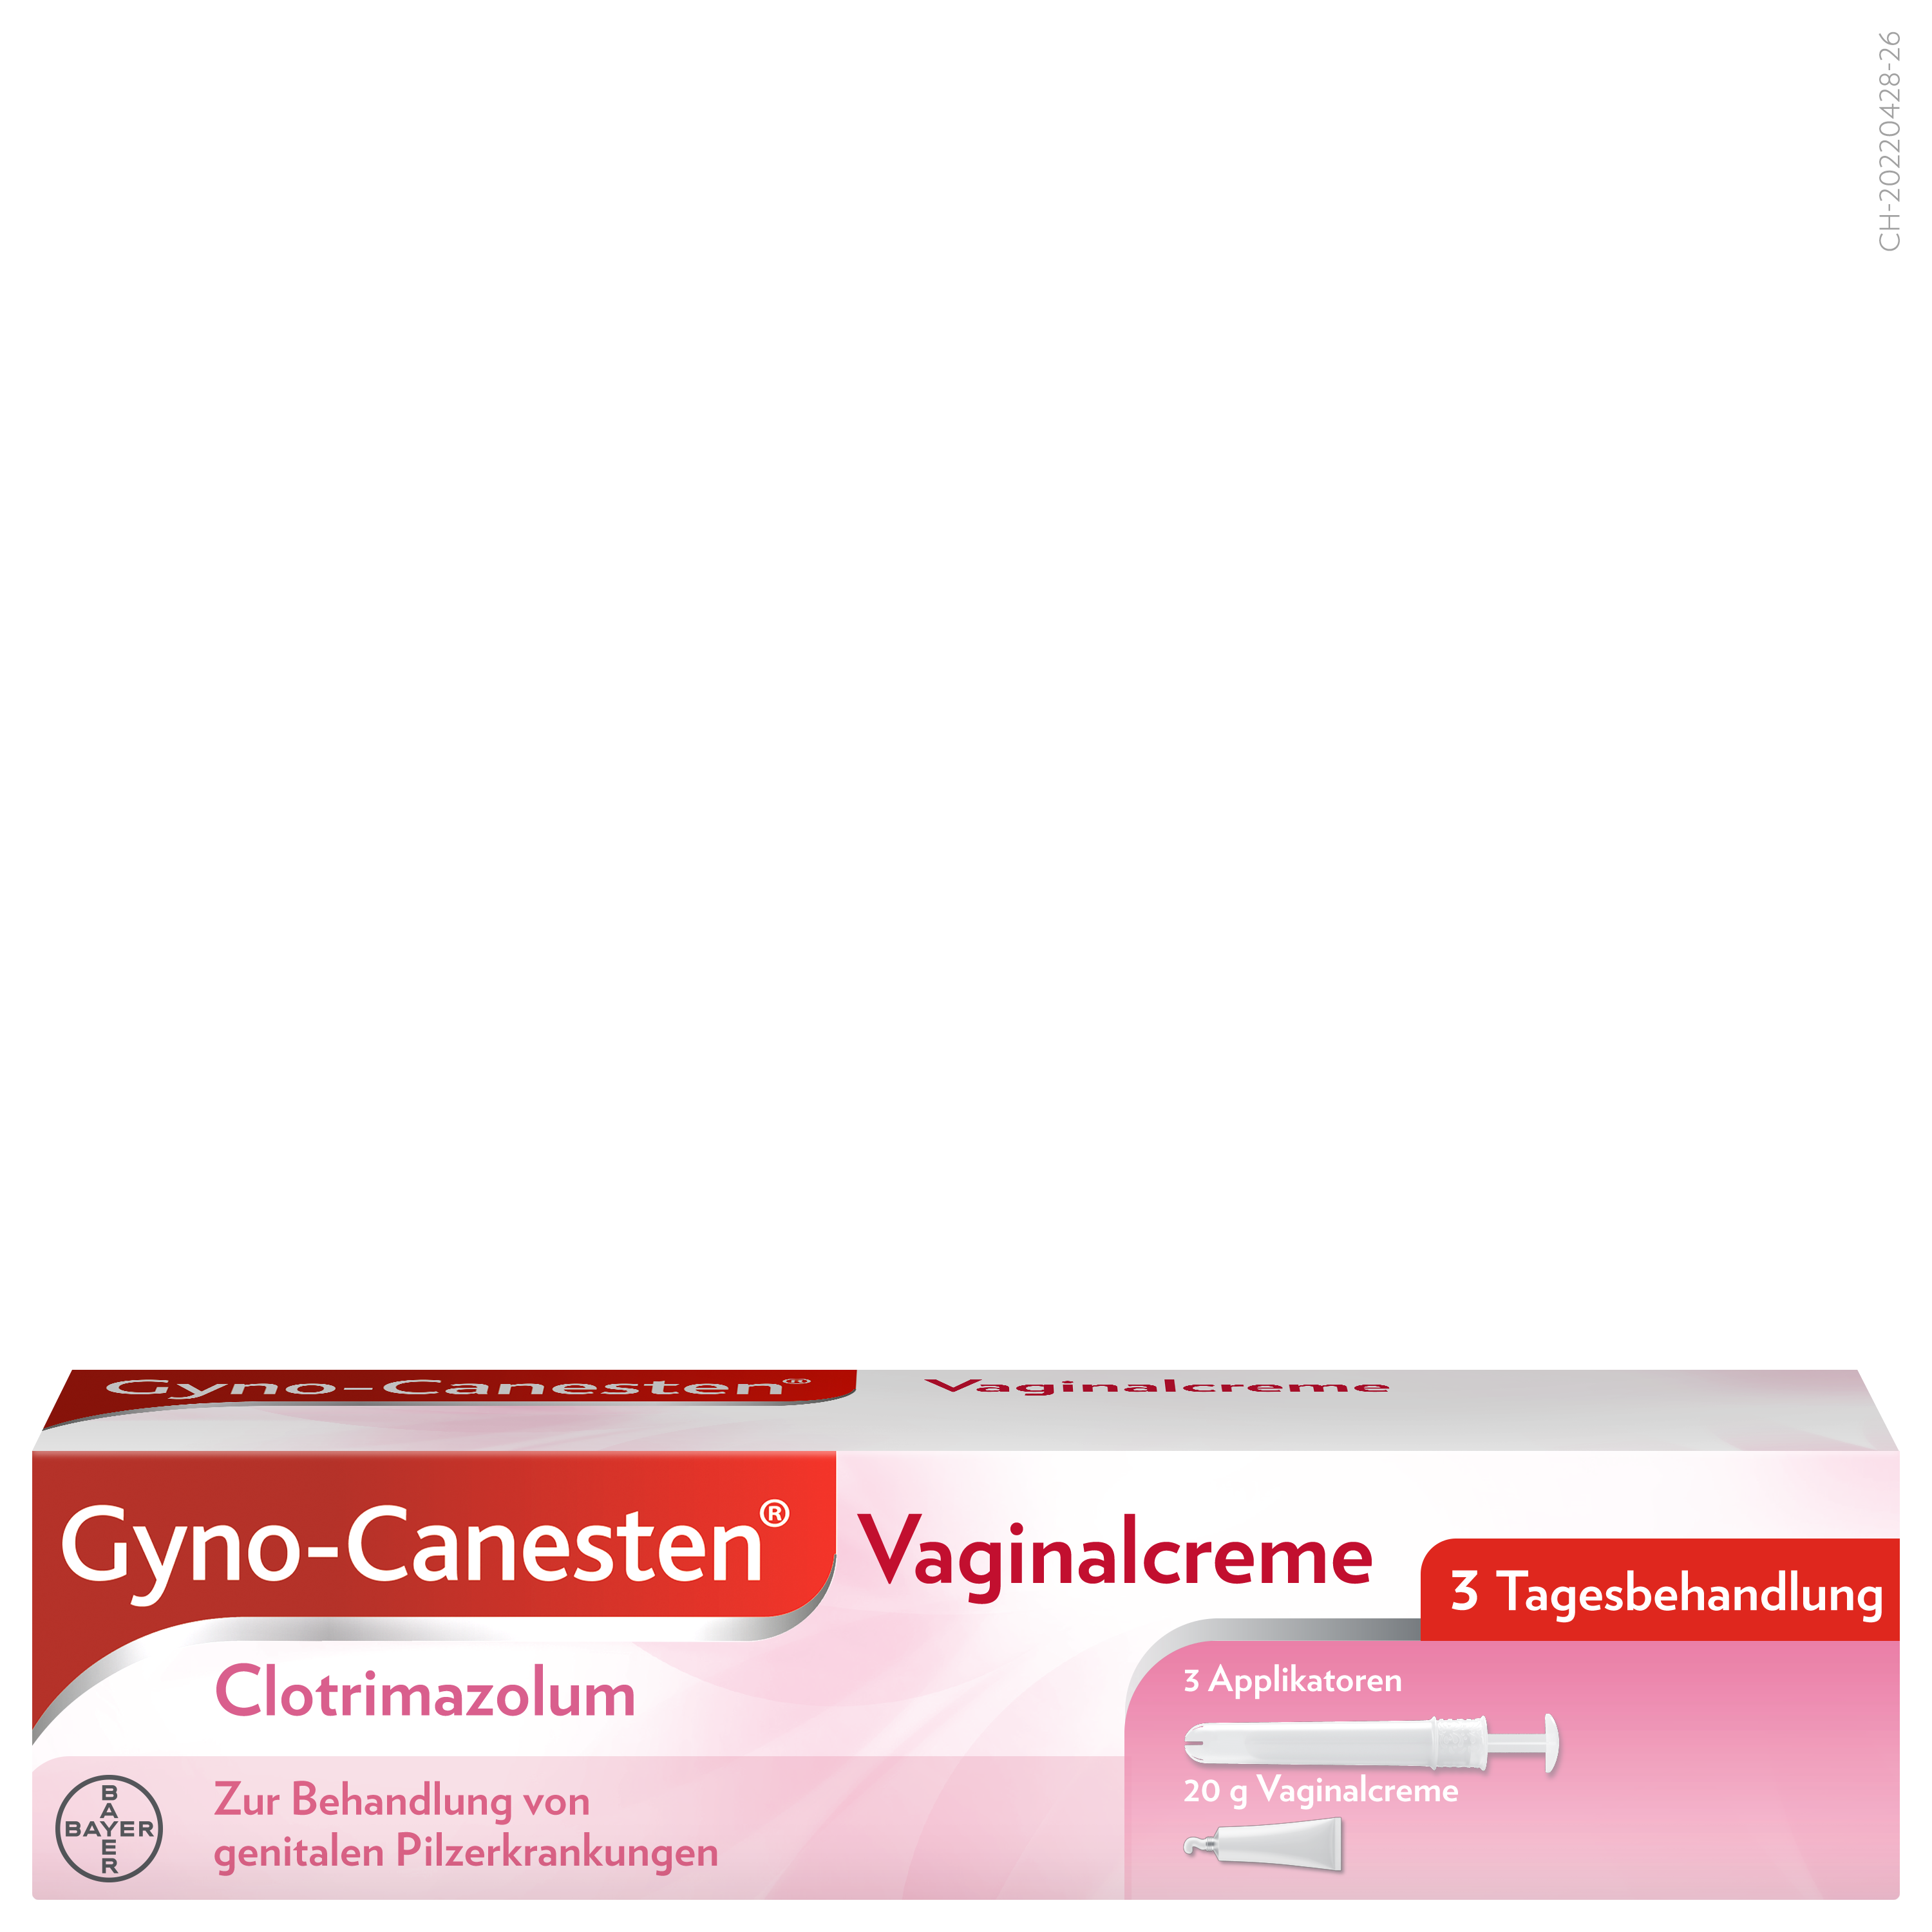 https://www.sunstore.ch/media/catalog/product/cache/74c1057f7991b4edb2bc7bdaa94de933/6/2/6280644-87-2020-Gyno-Canesten-Vaginalcreme-Ecomm-PI01-Simplified-PSD-CH.png